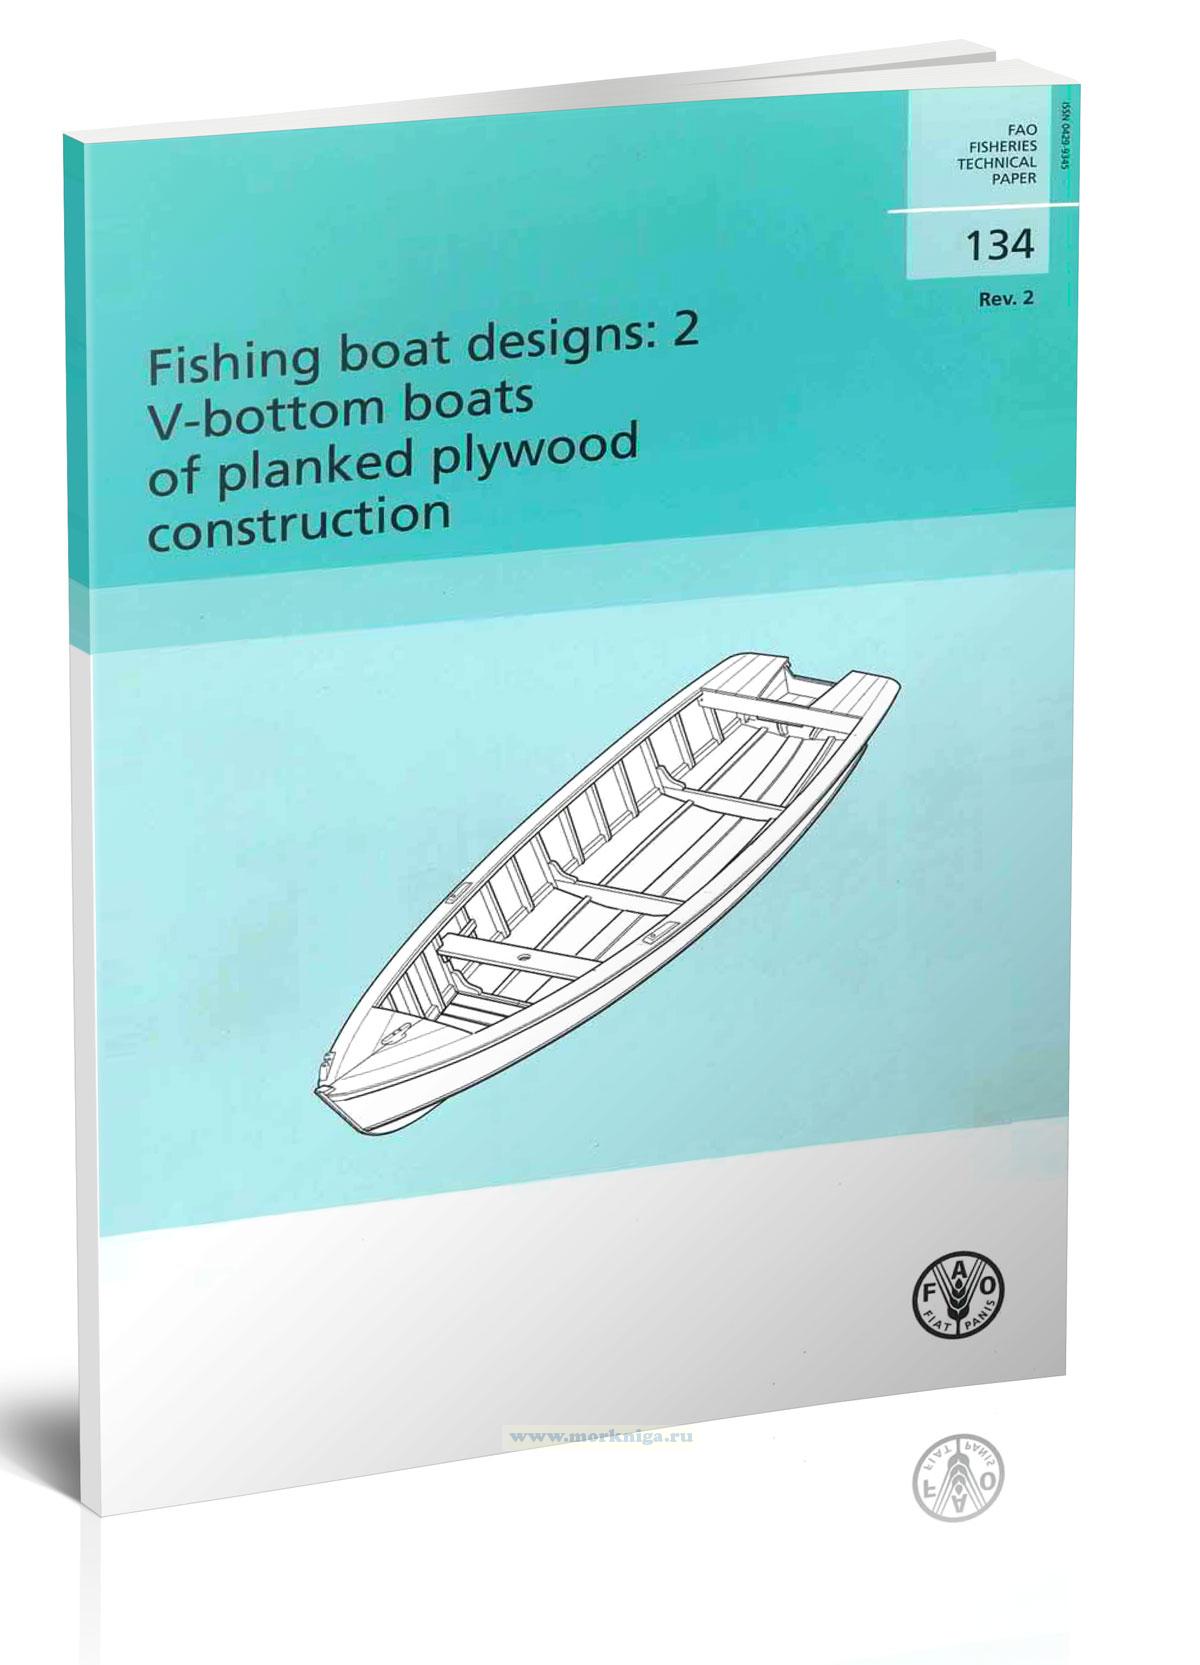 Fishing boat designs: 2 V-bottom boats of planked plywood construction/Проекты рыболовных лодок: 2 лодки с V-образным дном из фанеры